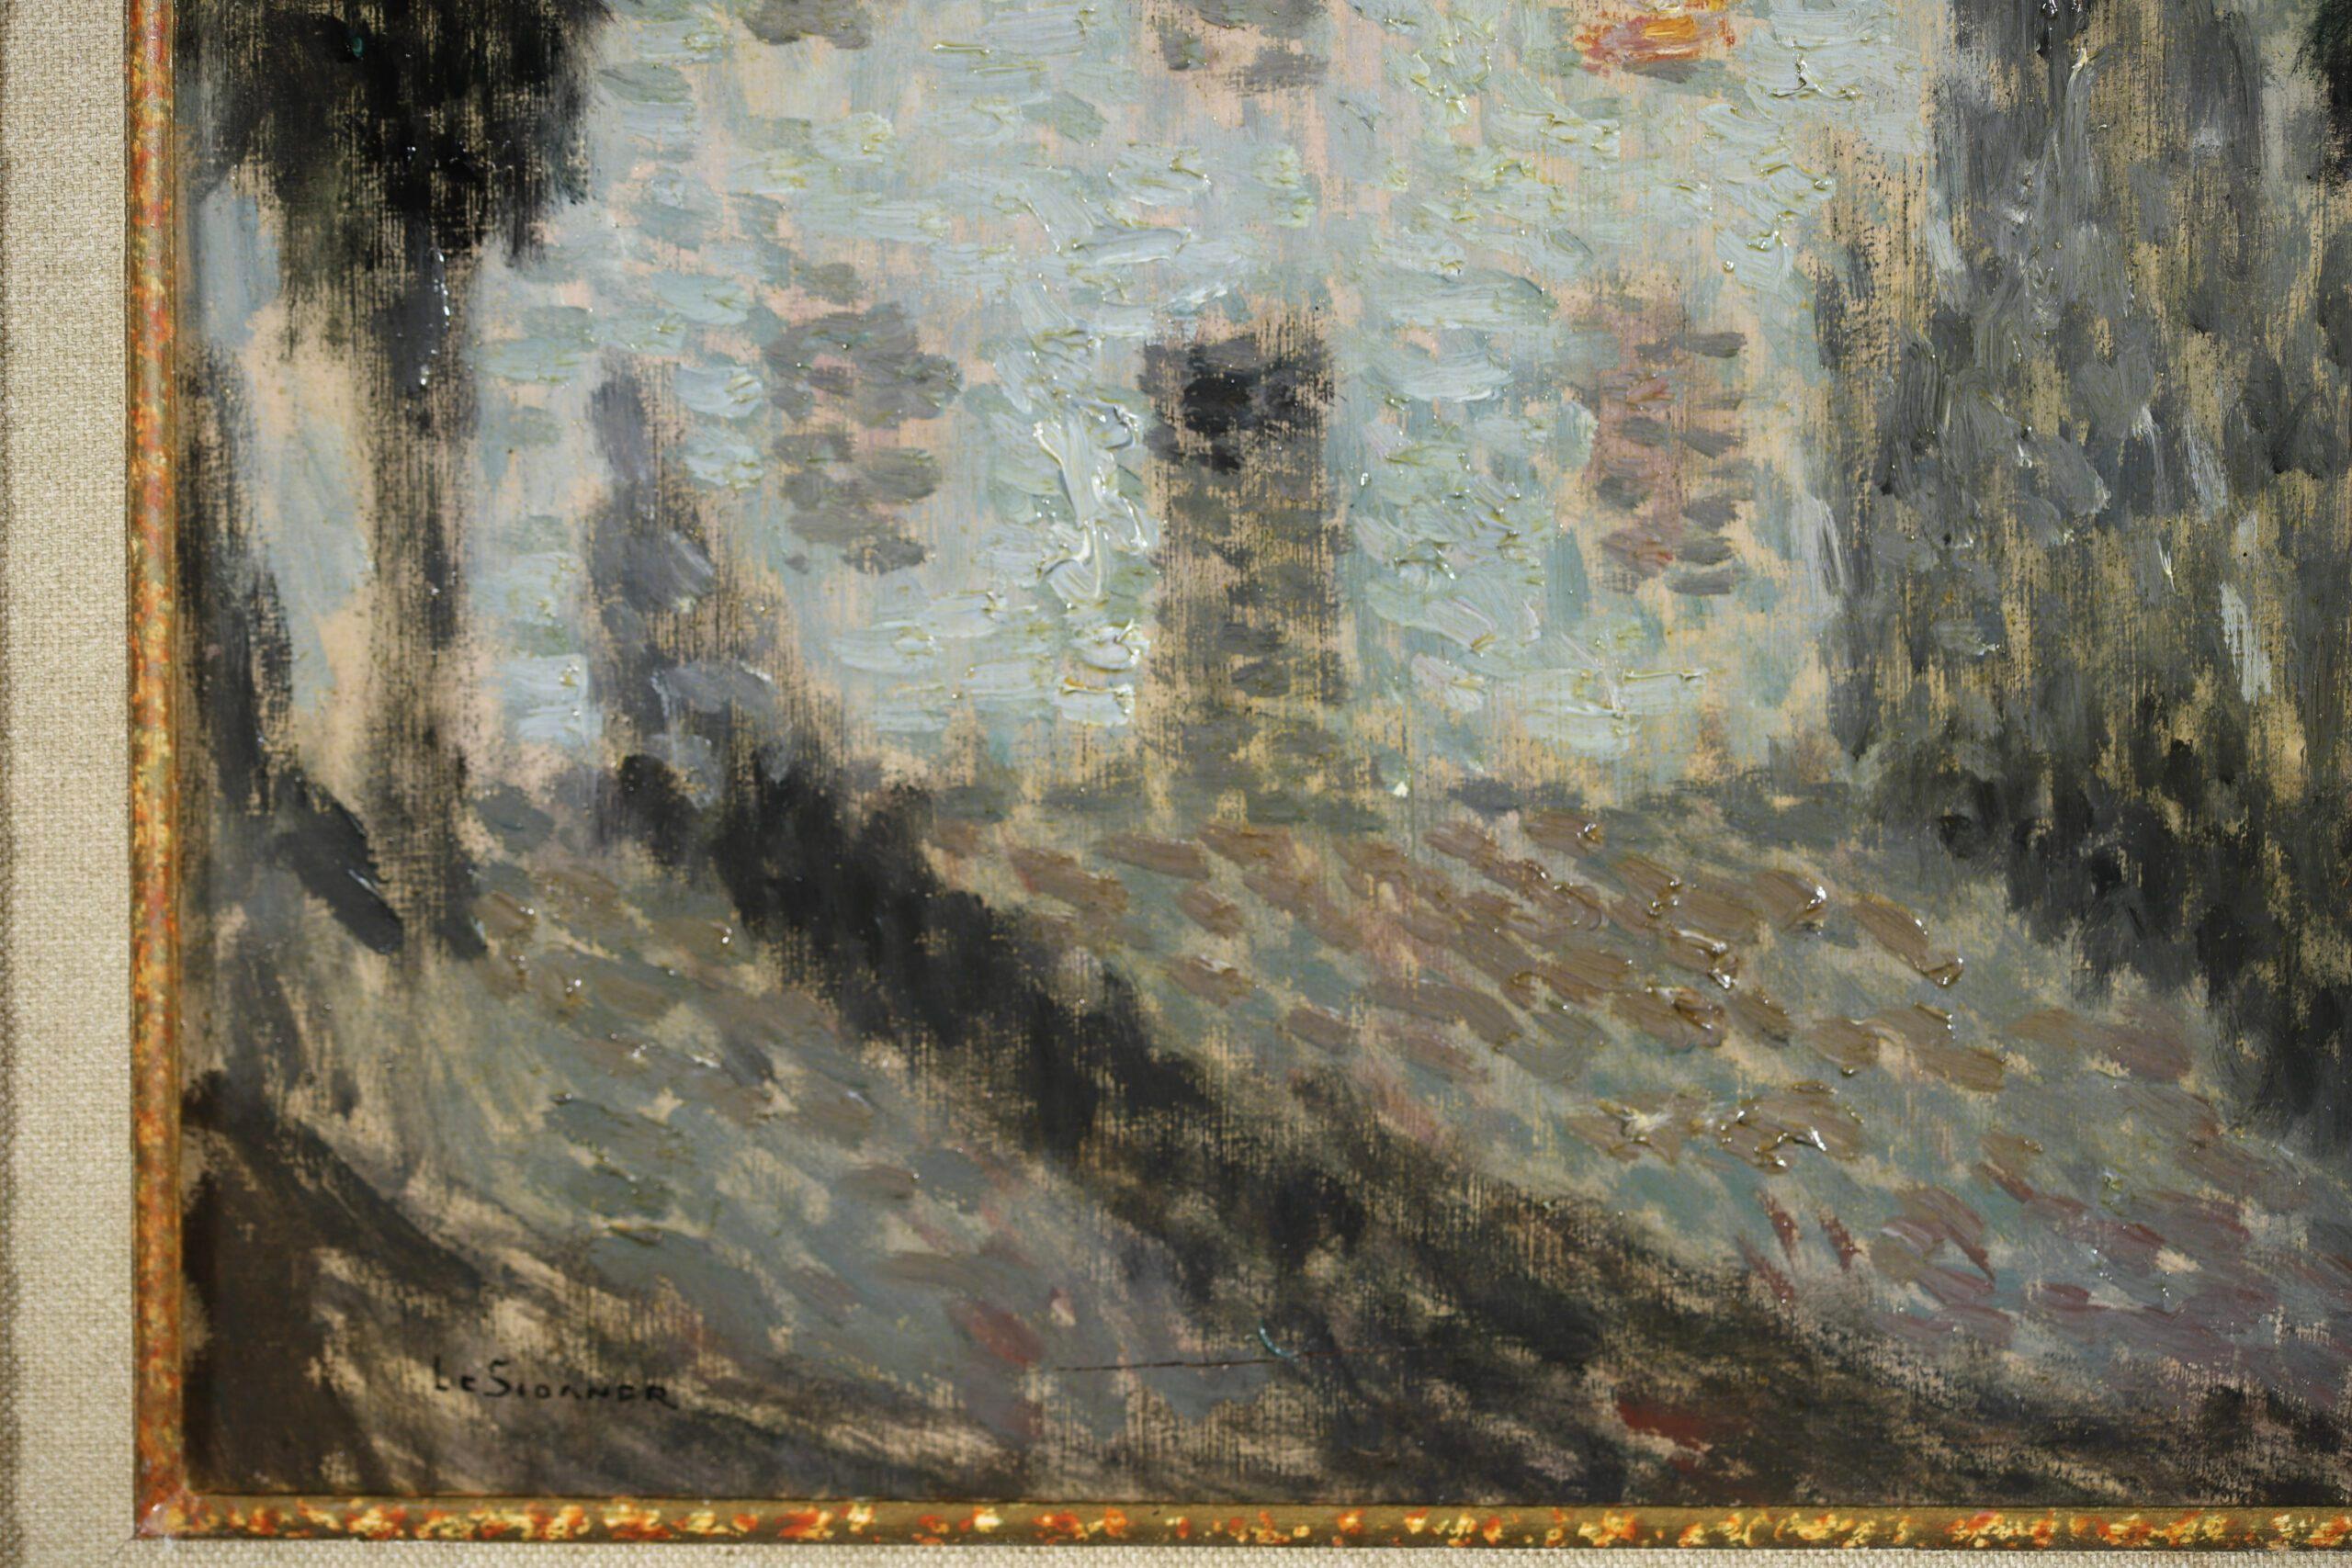 Nocturne, Fenetre Eclairee - Post Impressionist Landscape Oil - Henri Le Sidaner For Sale 6